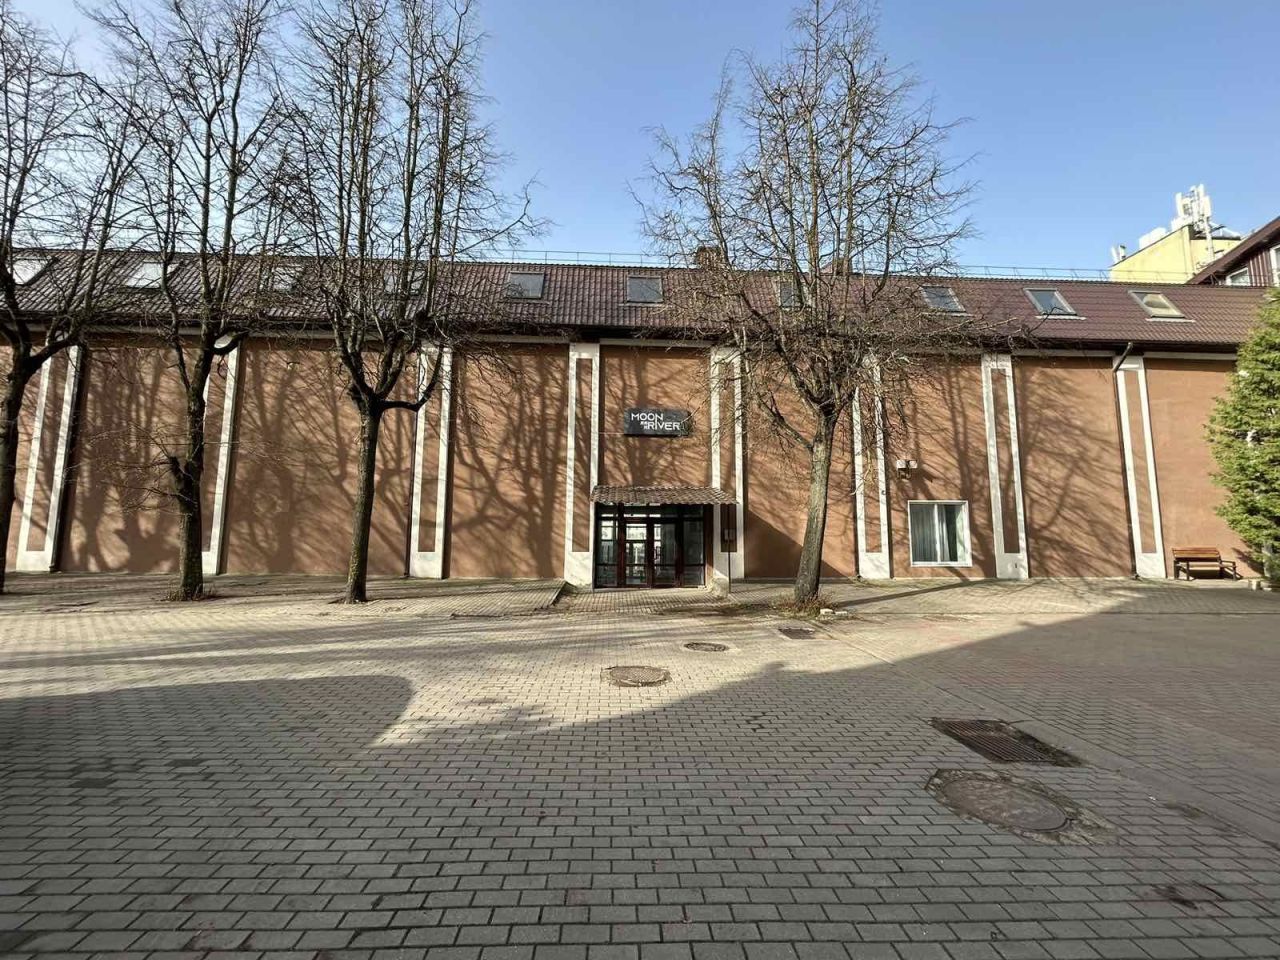 Commercial property Minsk, Belarus, 1 819.7 sq.m - picture 1